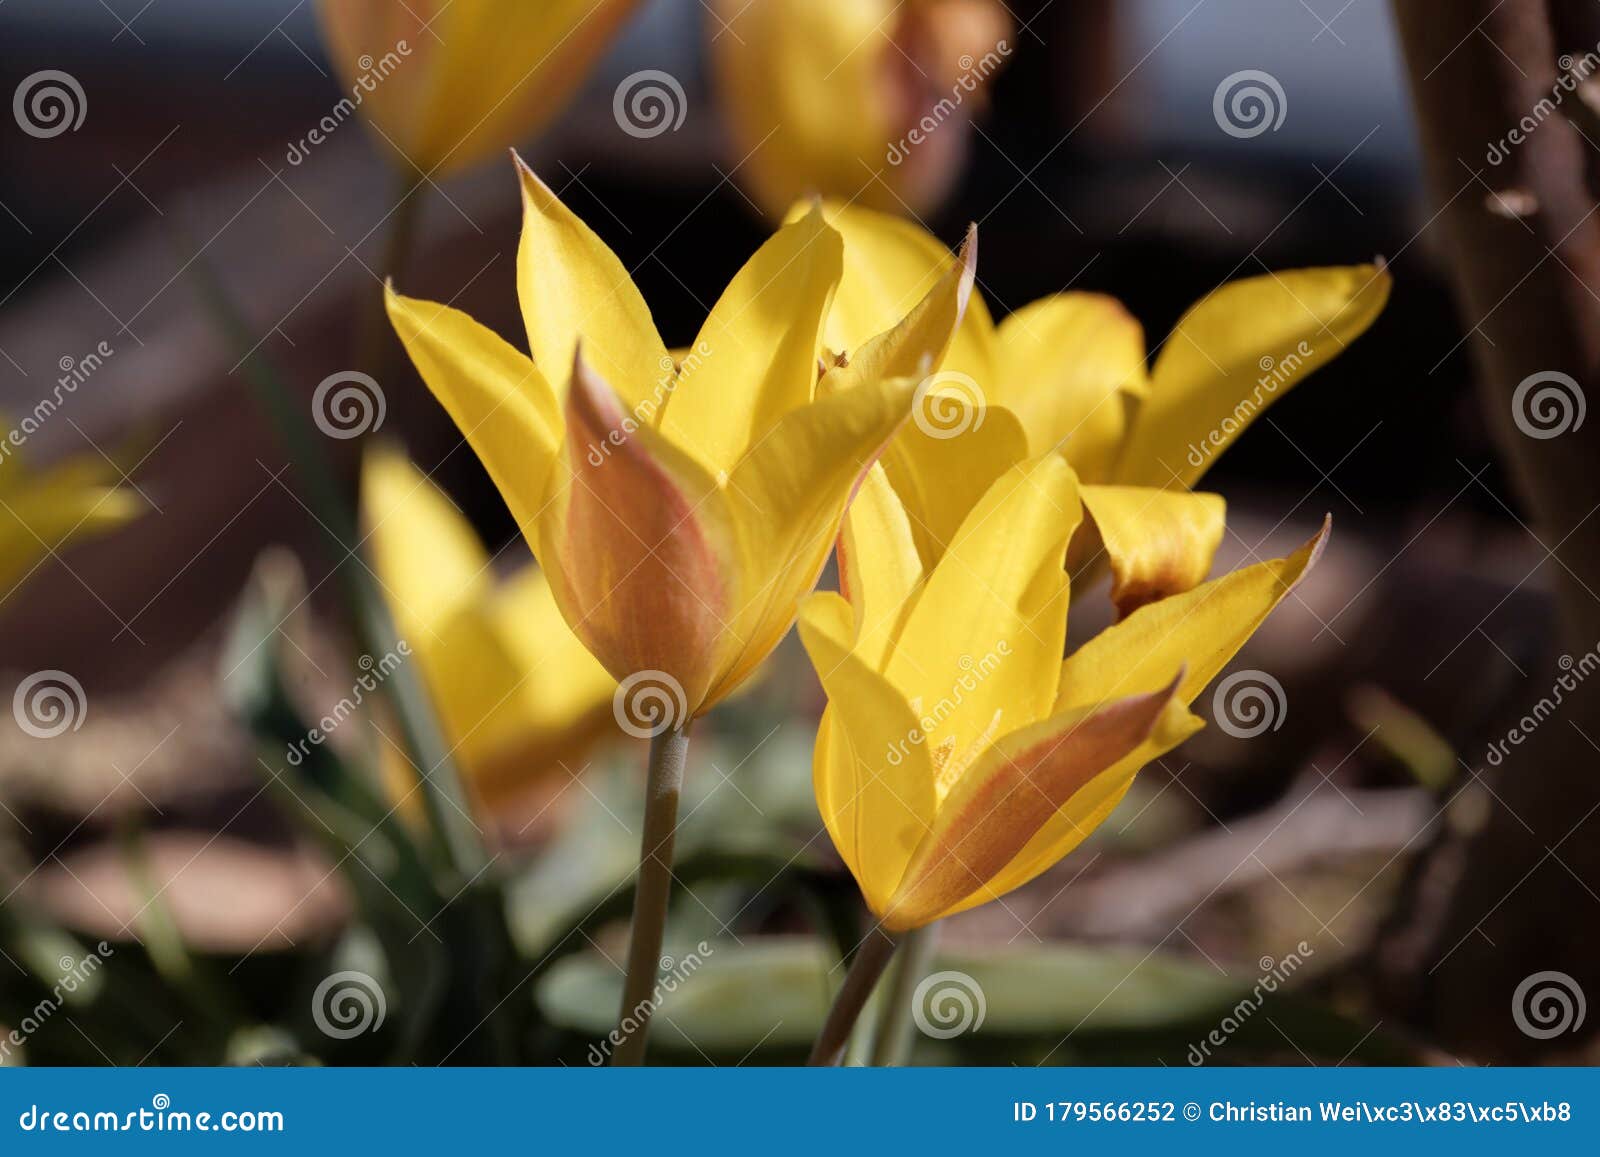 Flower Of The Tulip Tulipa Kolpakowskiana Stock Photo Image Of Closeup Garden 179566252